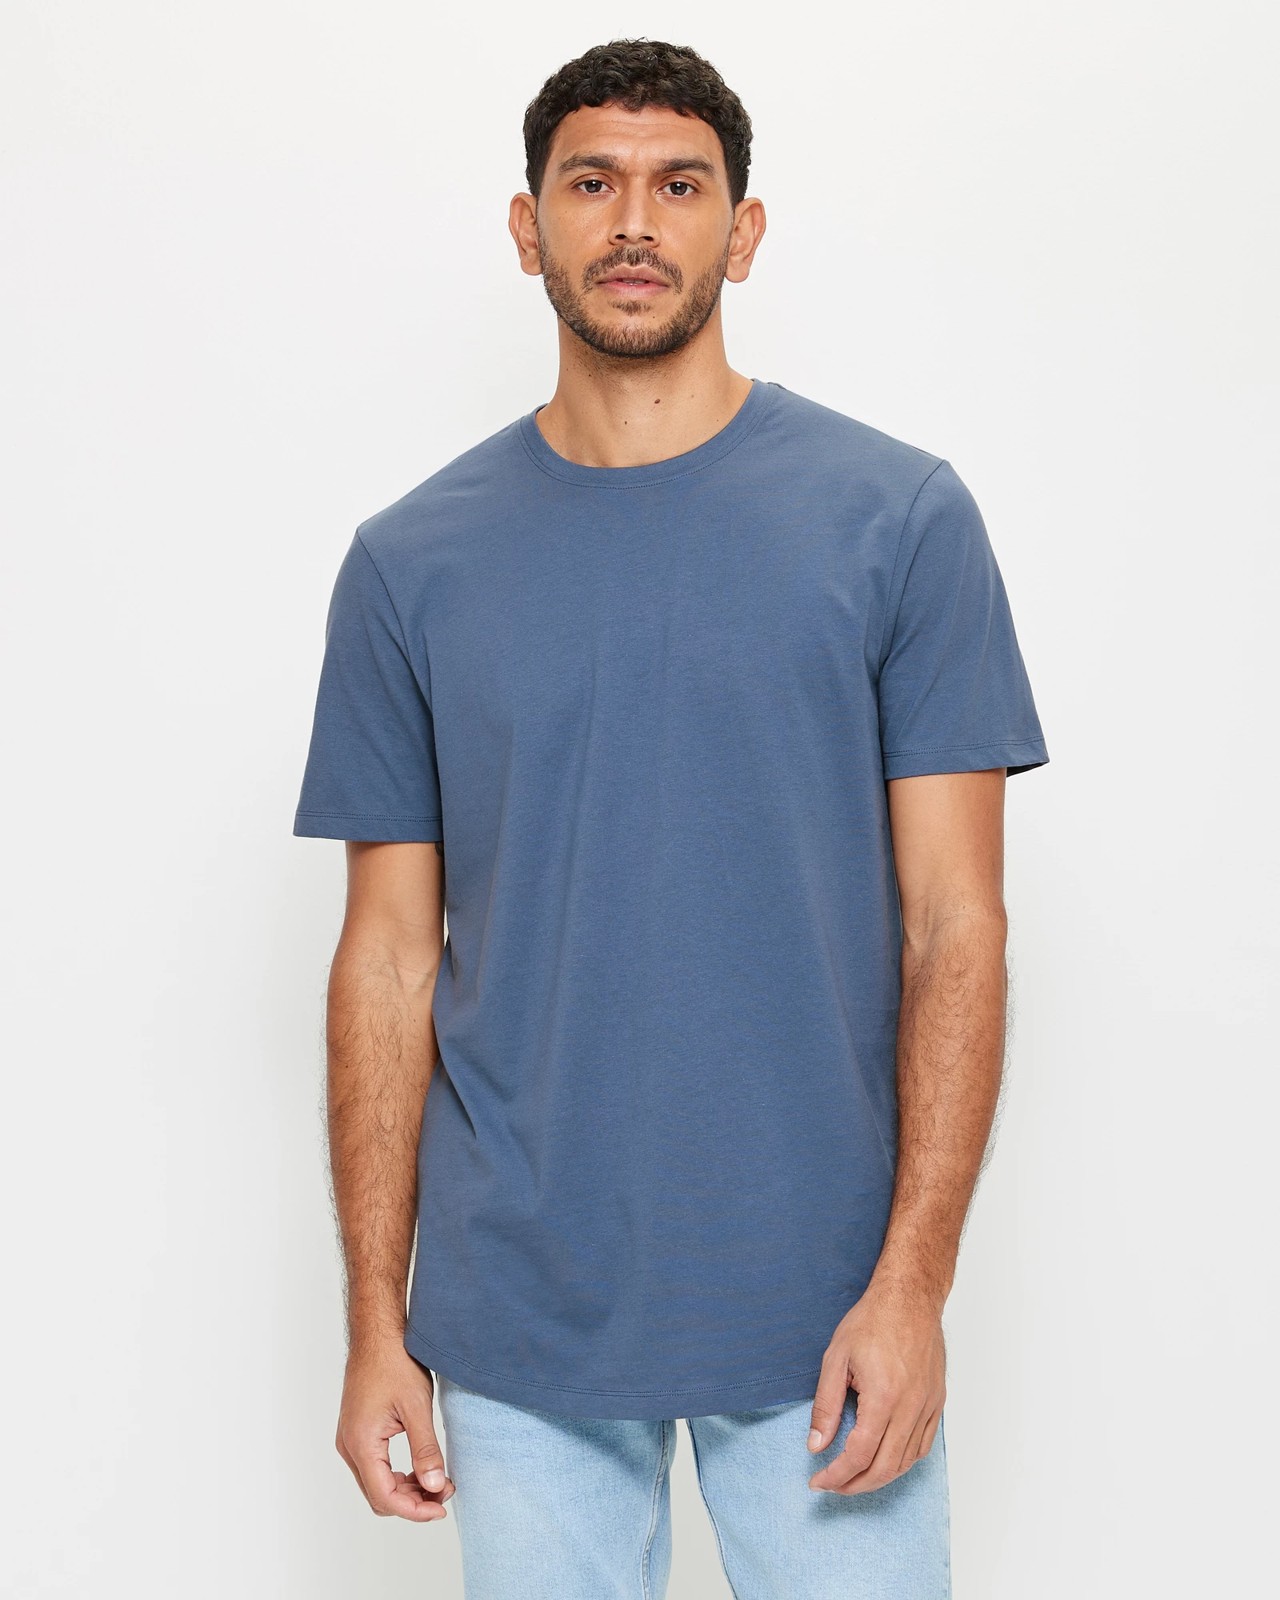 Australian Cotton Curved Hem T-Shirt | Target Australia